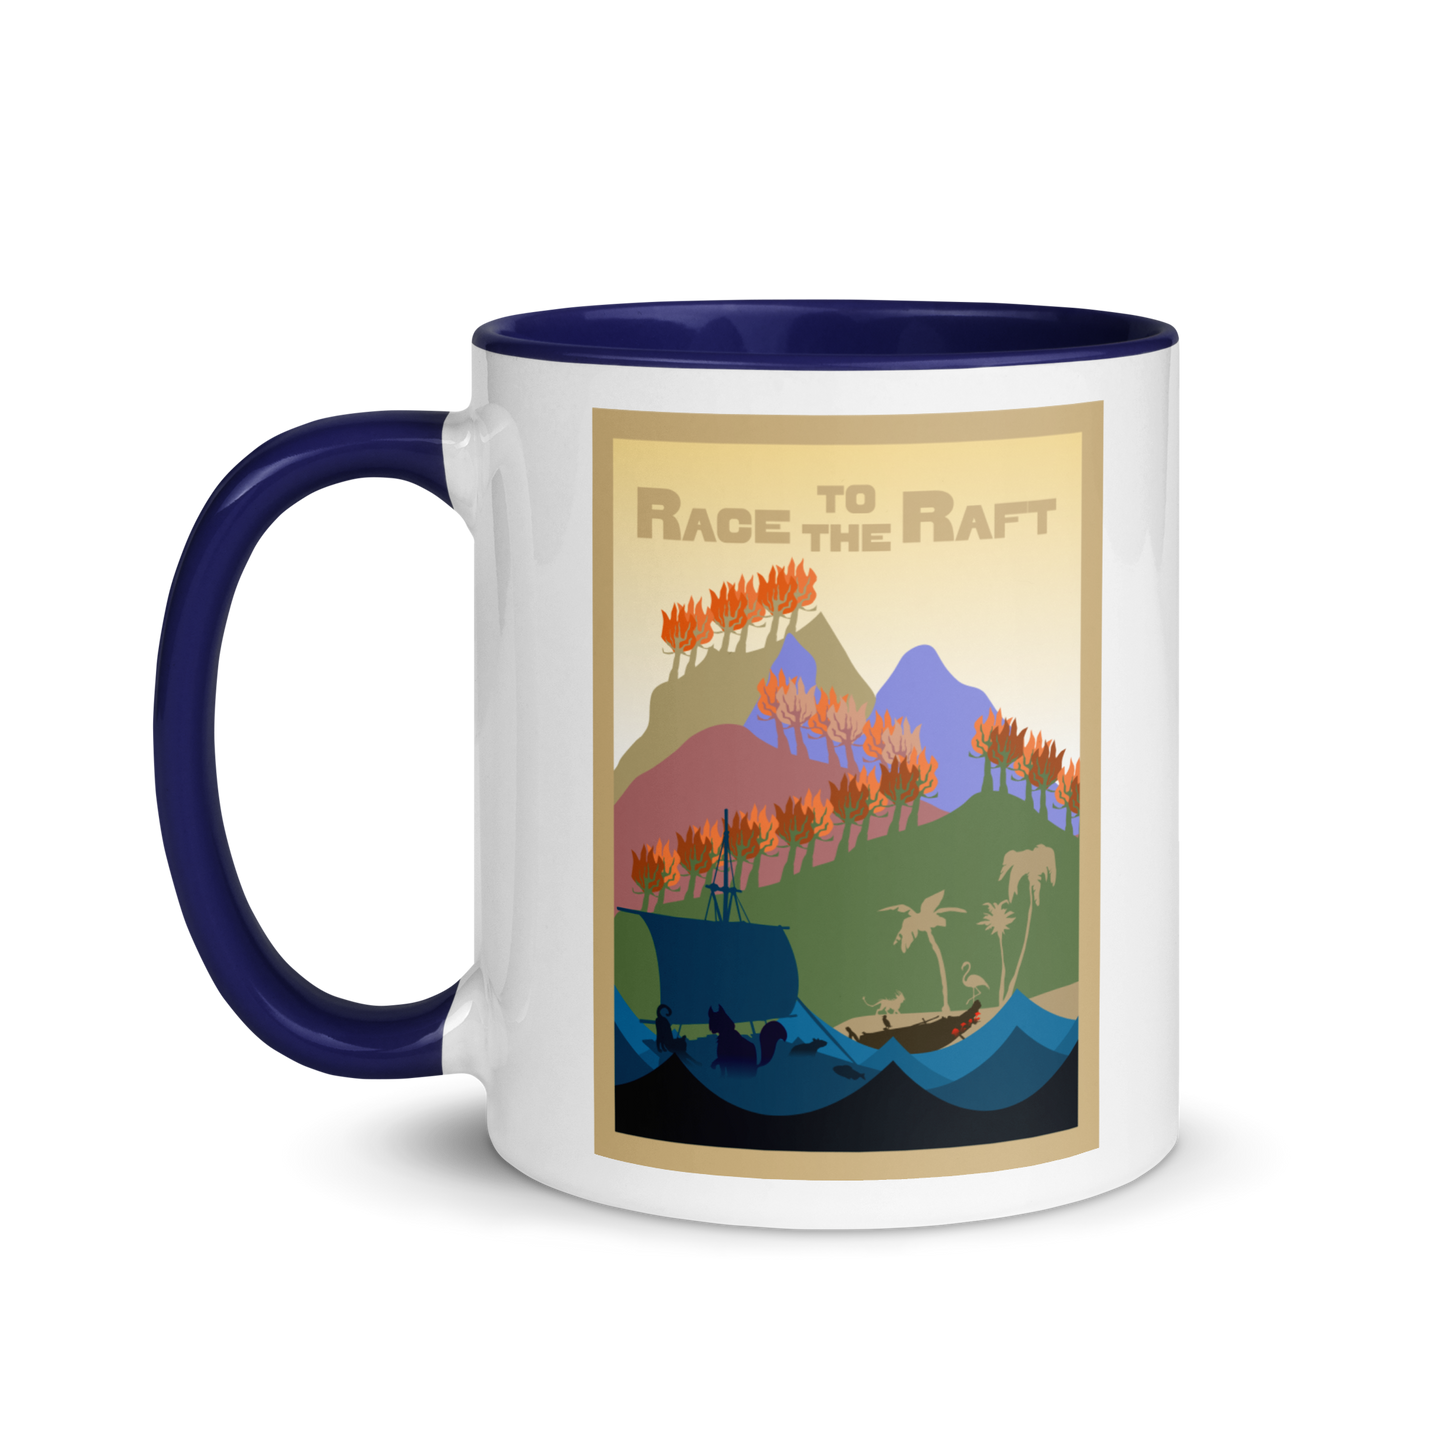 Race to the Raft Minimalist Board Game Mug